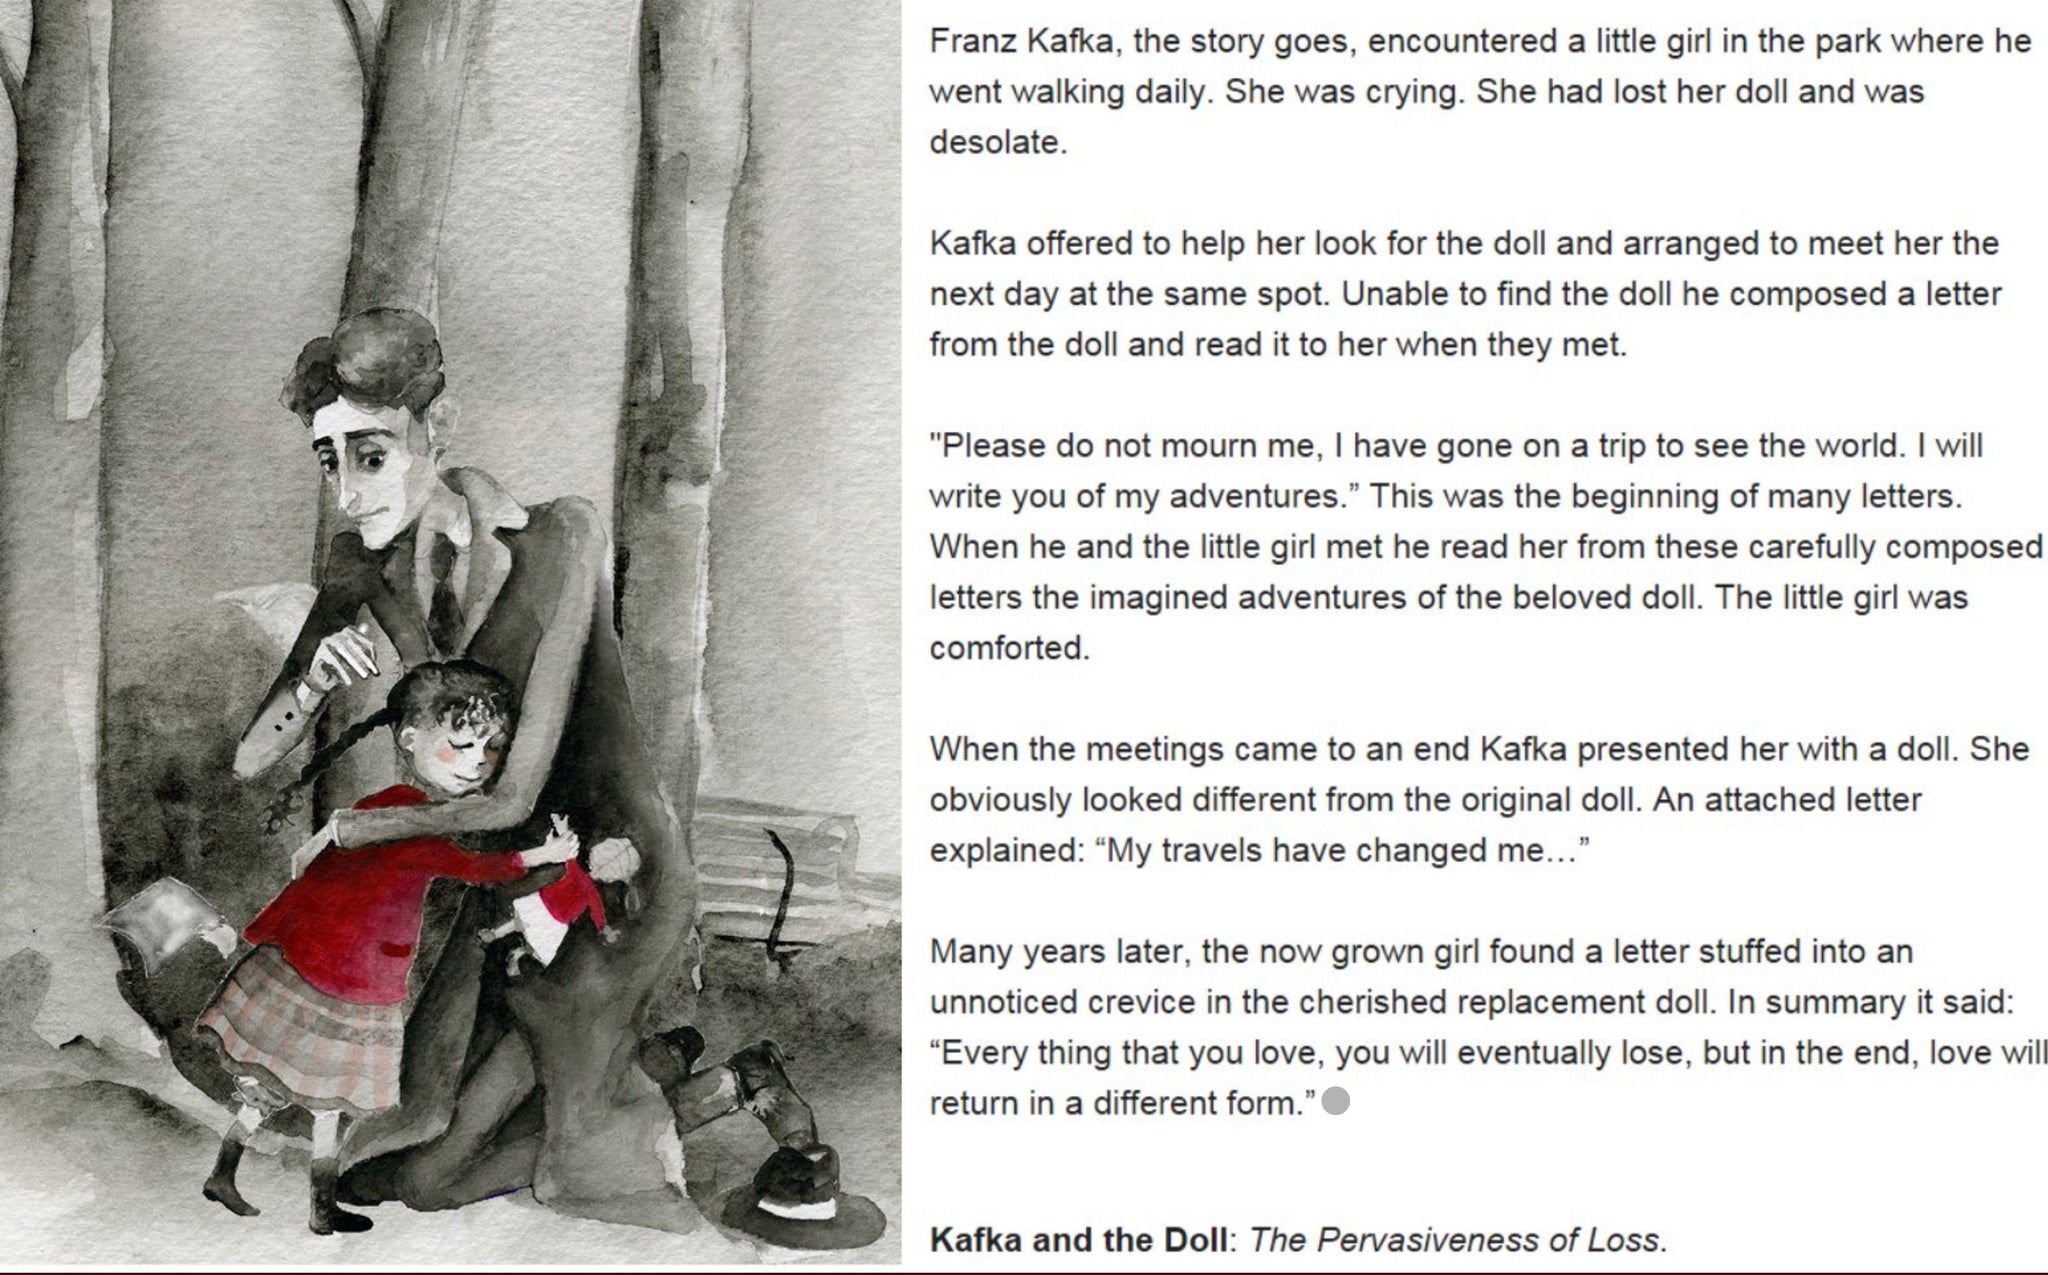 Kafka and the child